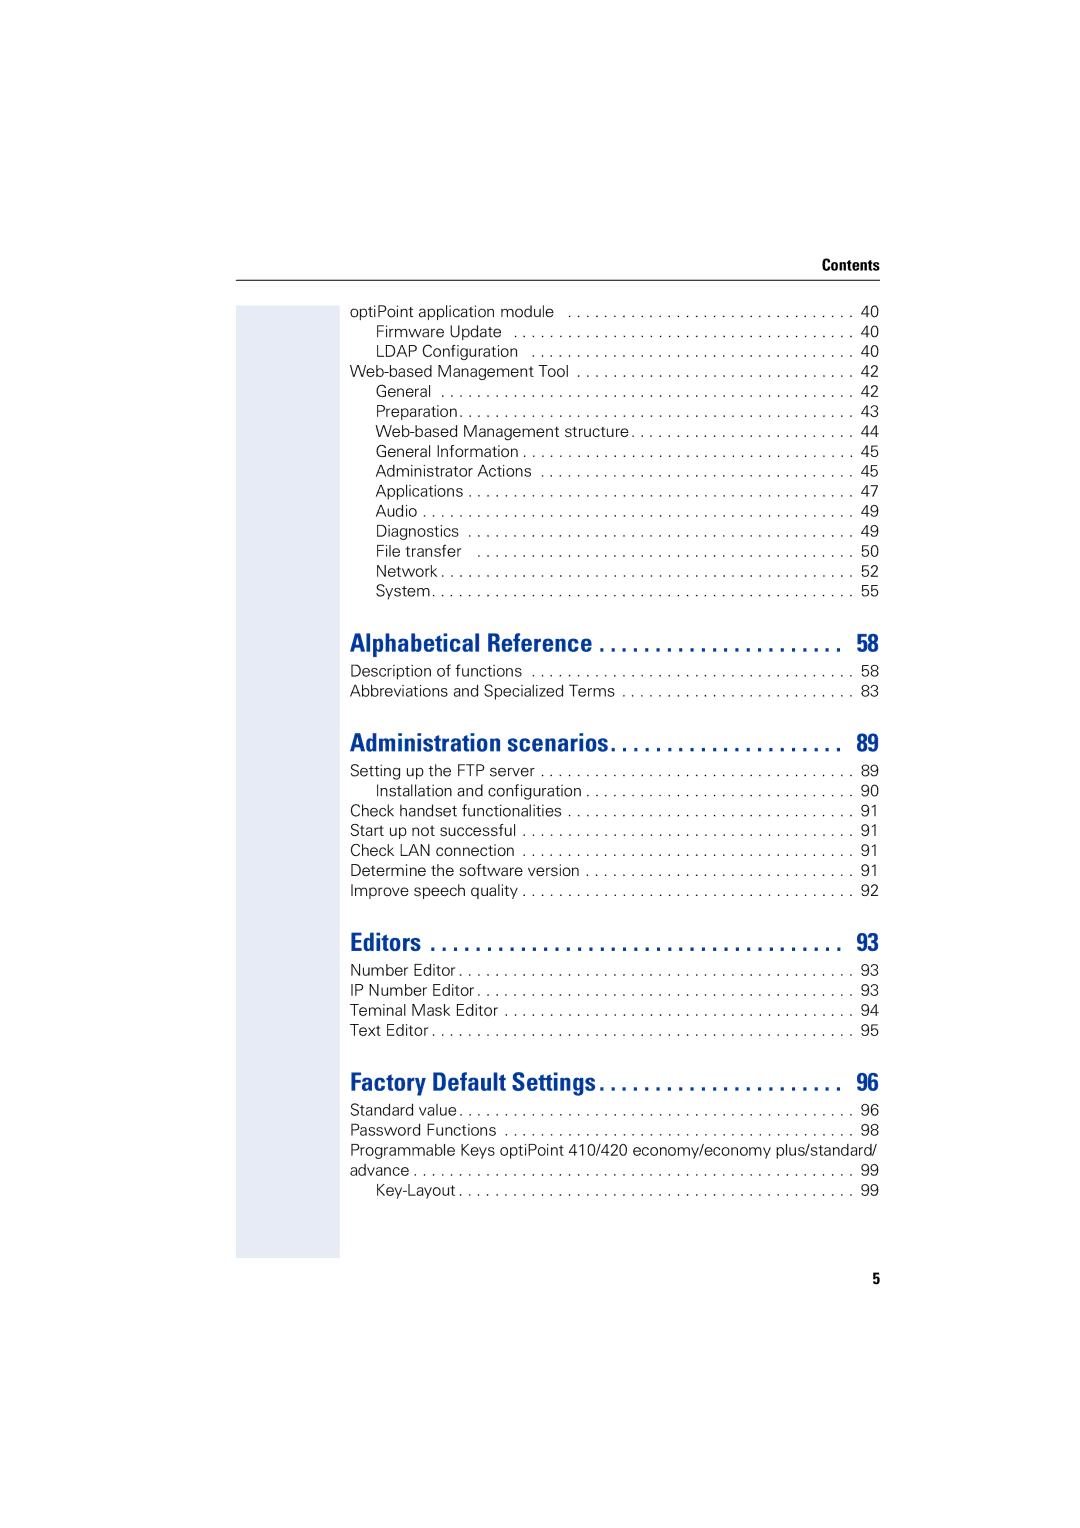 Siemens 2000 manual Alphabetical Reference, Administration scenarios, Editors, Factory Default Settings 